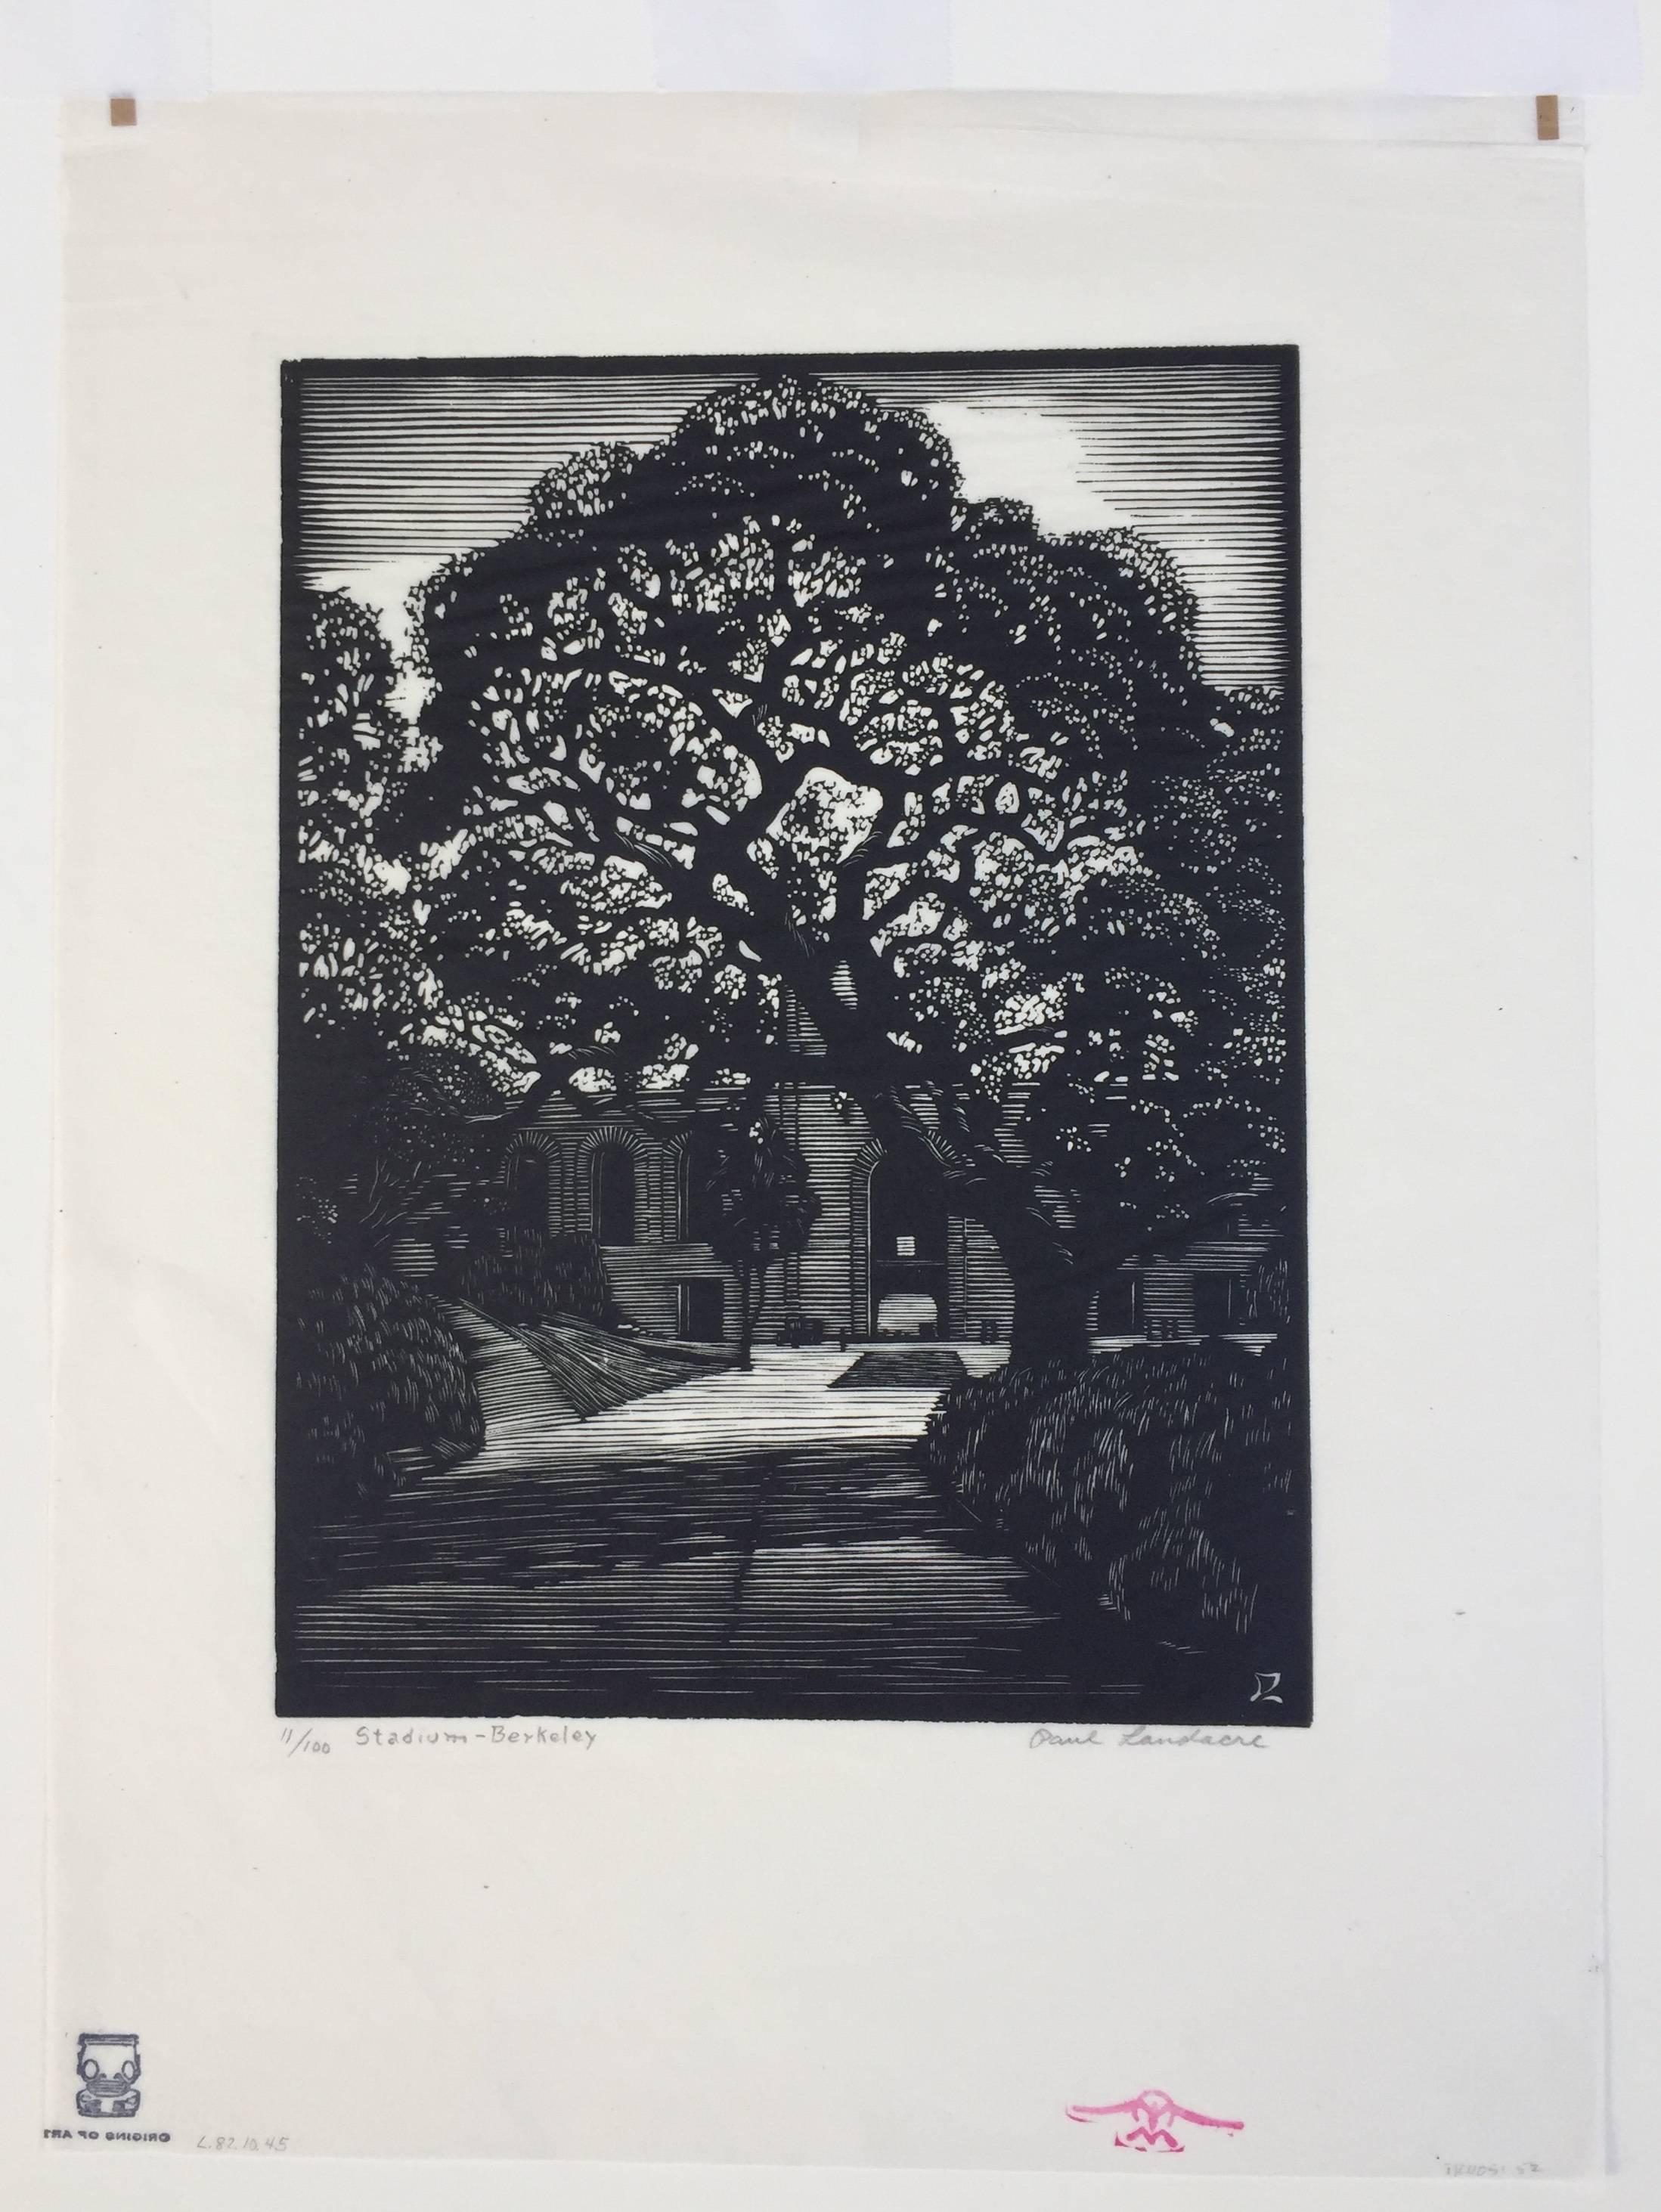 BERKELEY STADIUM - Print by Paul Landacre